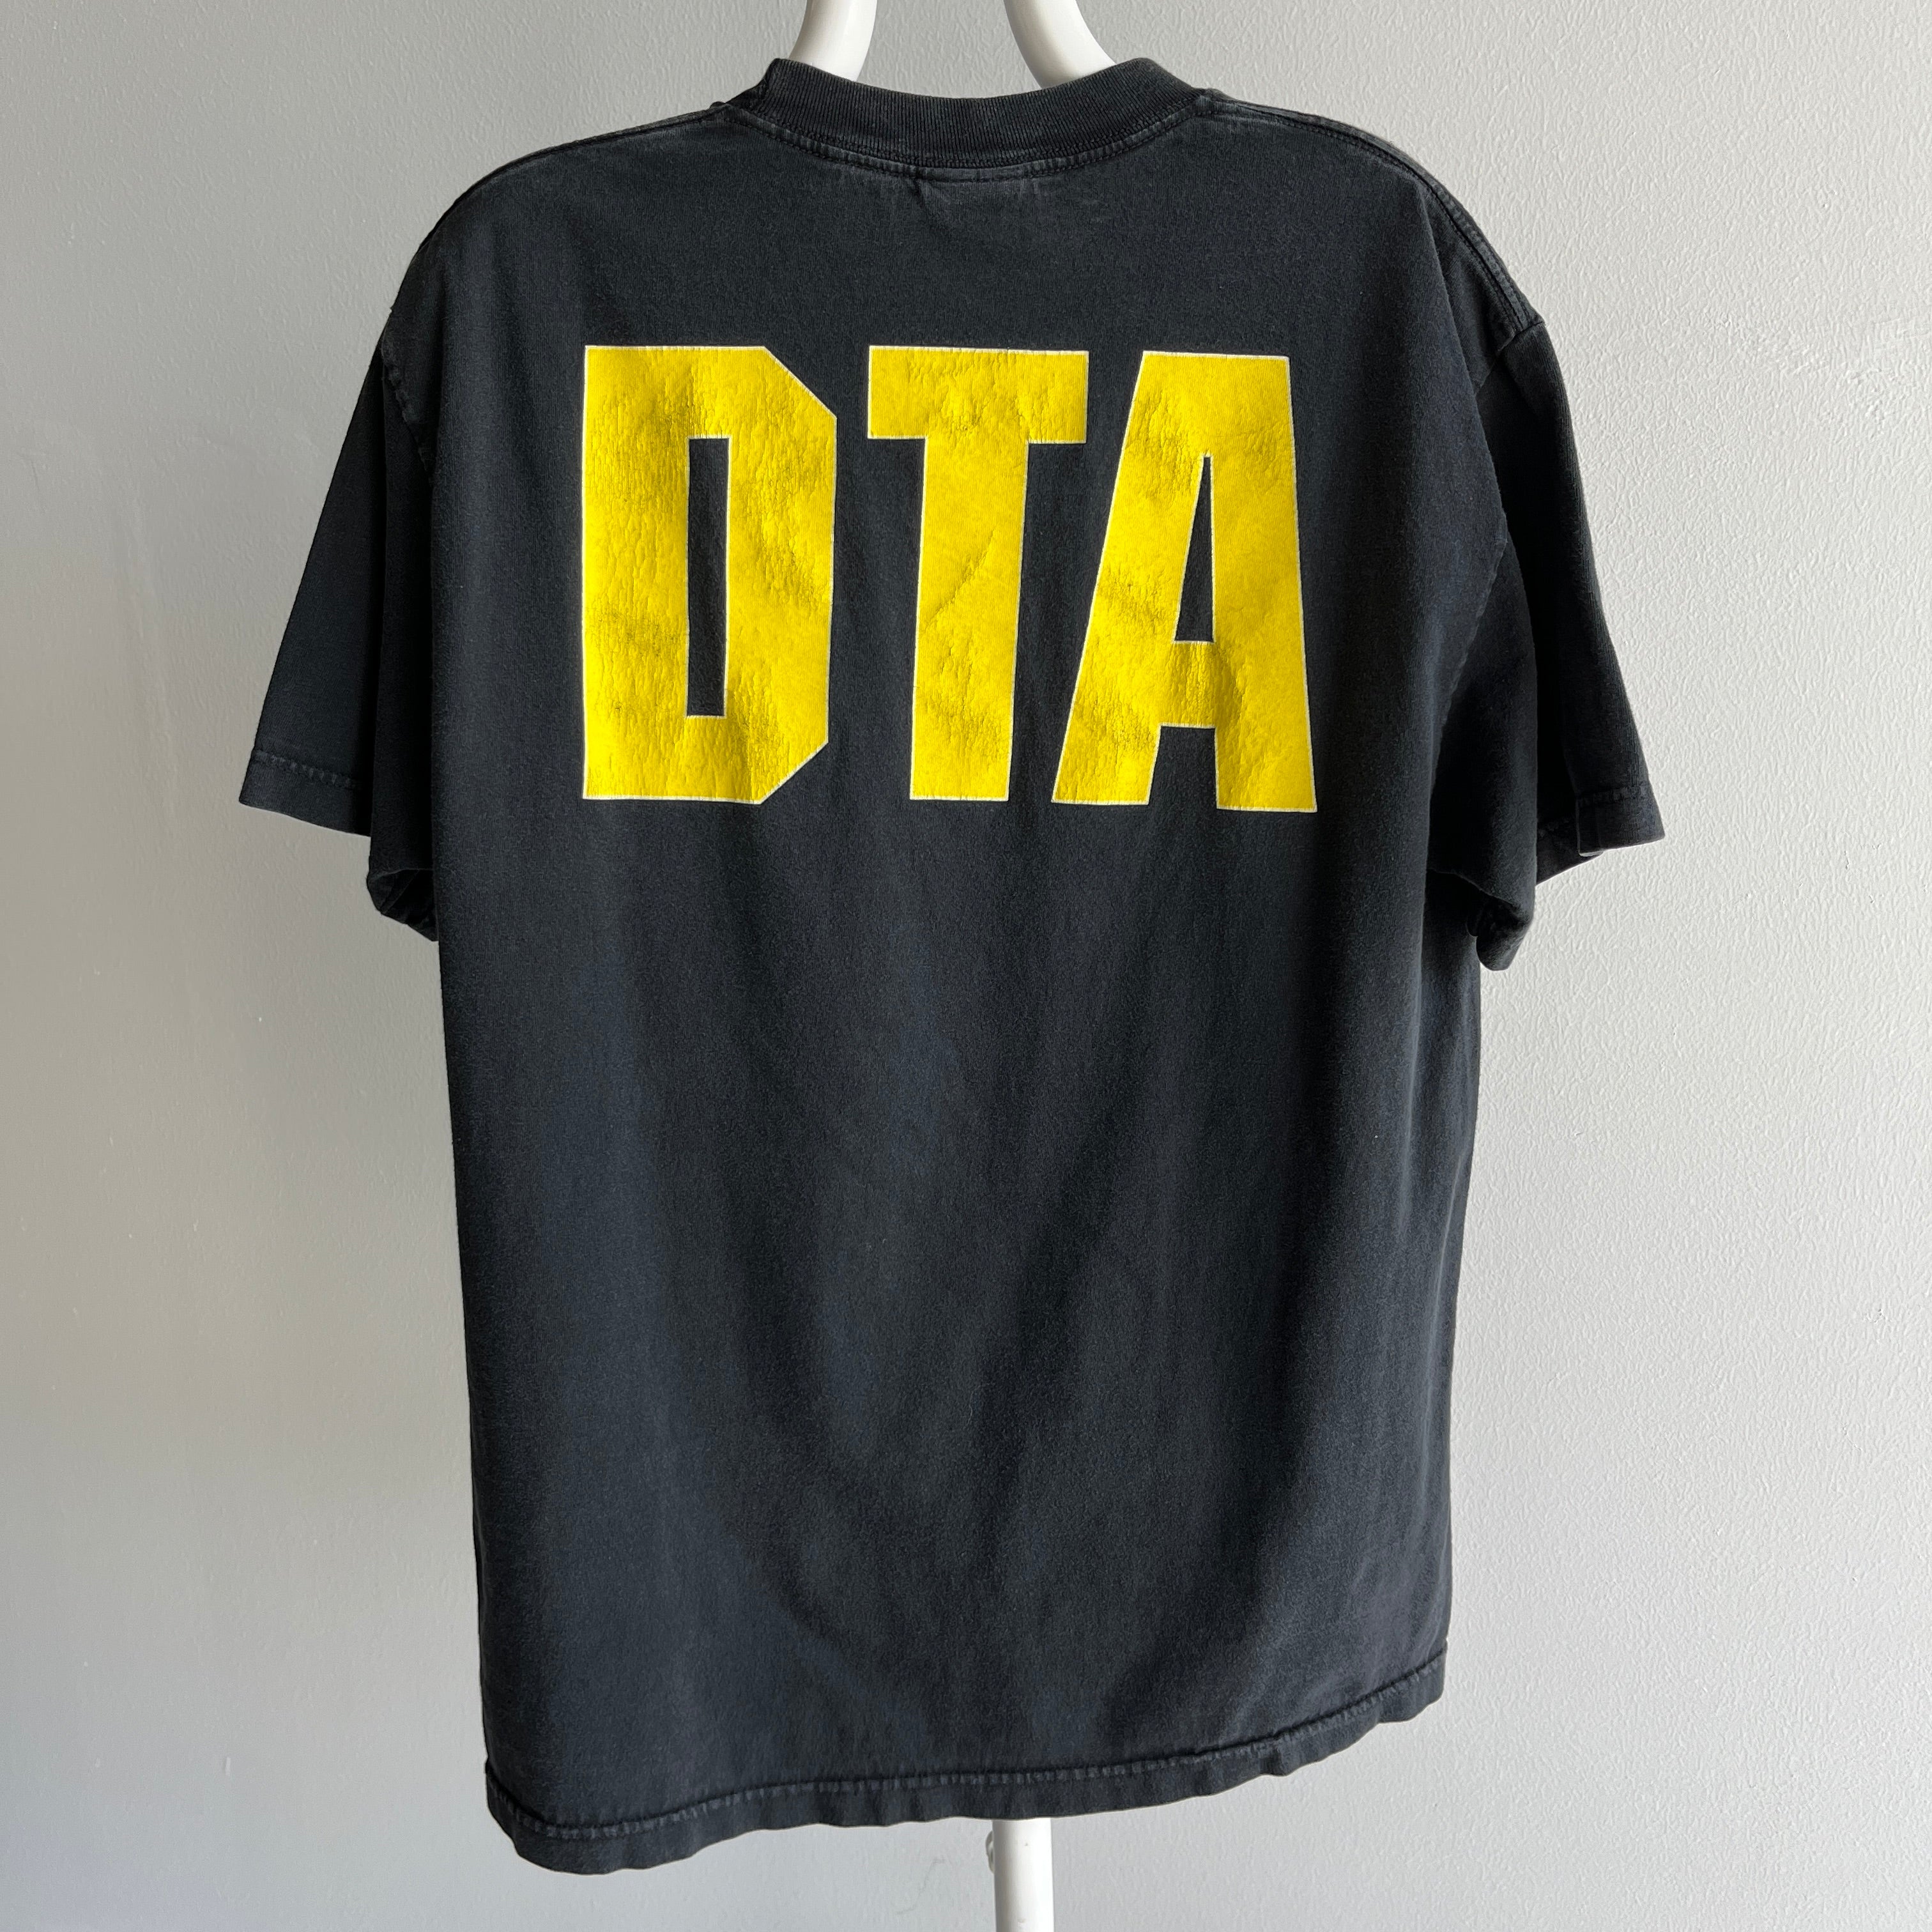 2005-ish Don't Trust Anyone T-Shirt